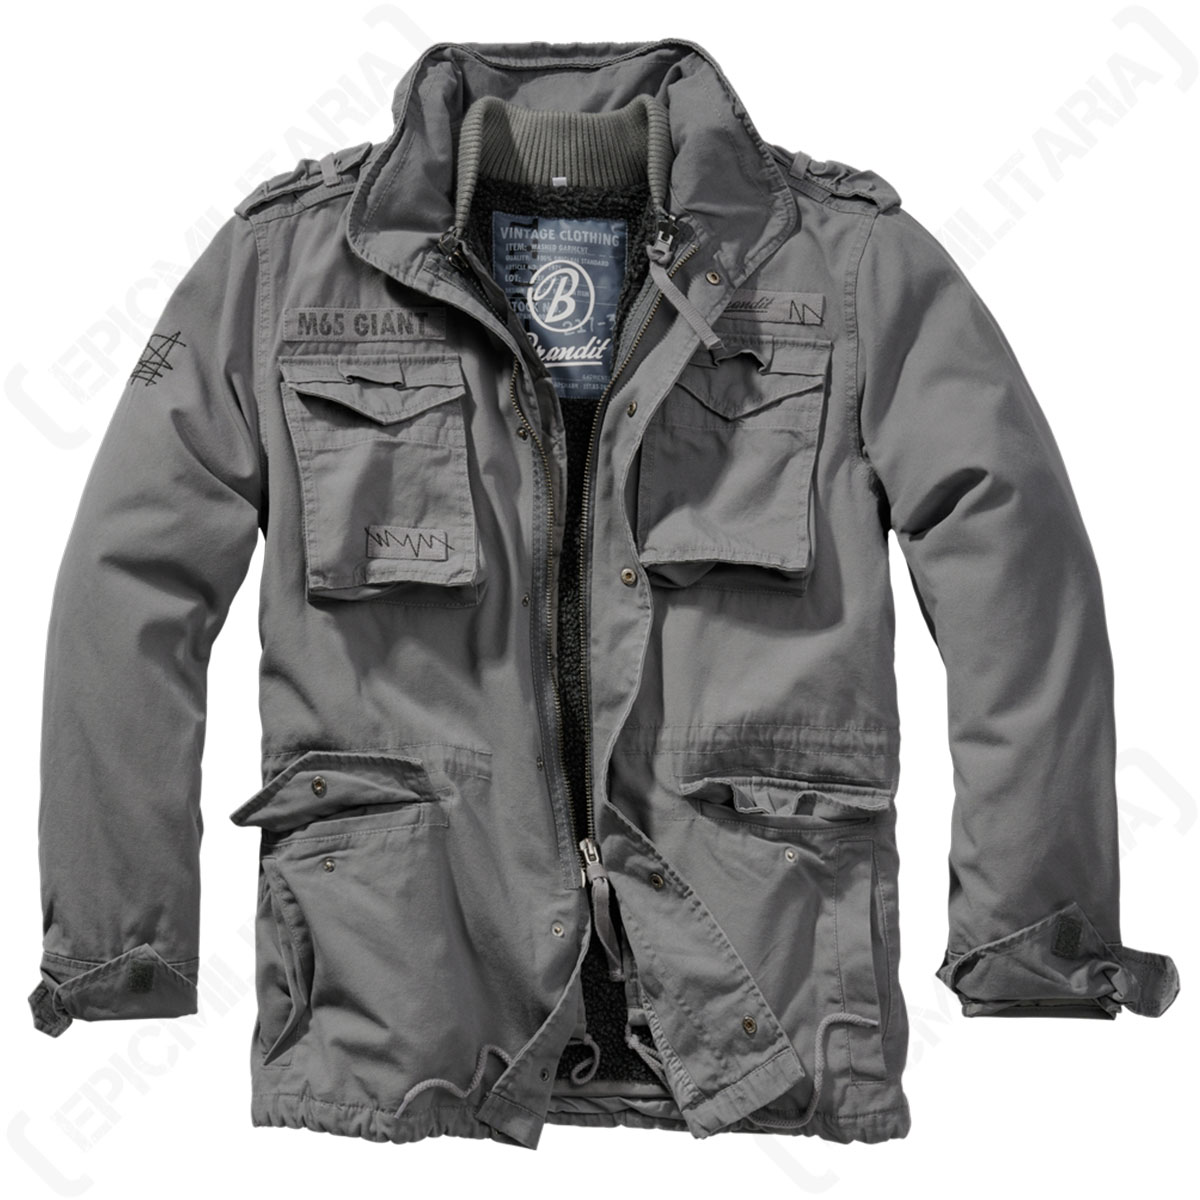 Brandit M65 Giant Jacket - Charcoal Grey - Epic Militaria